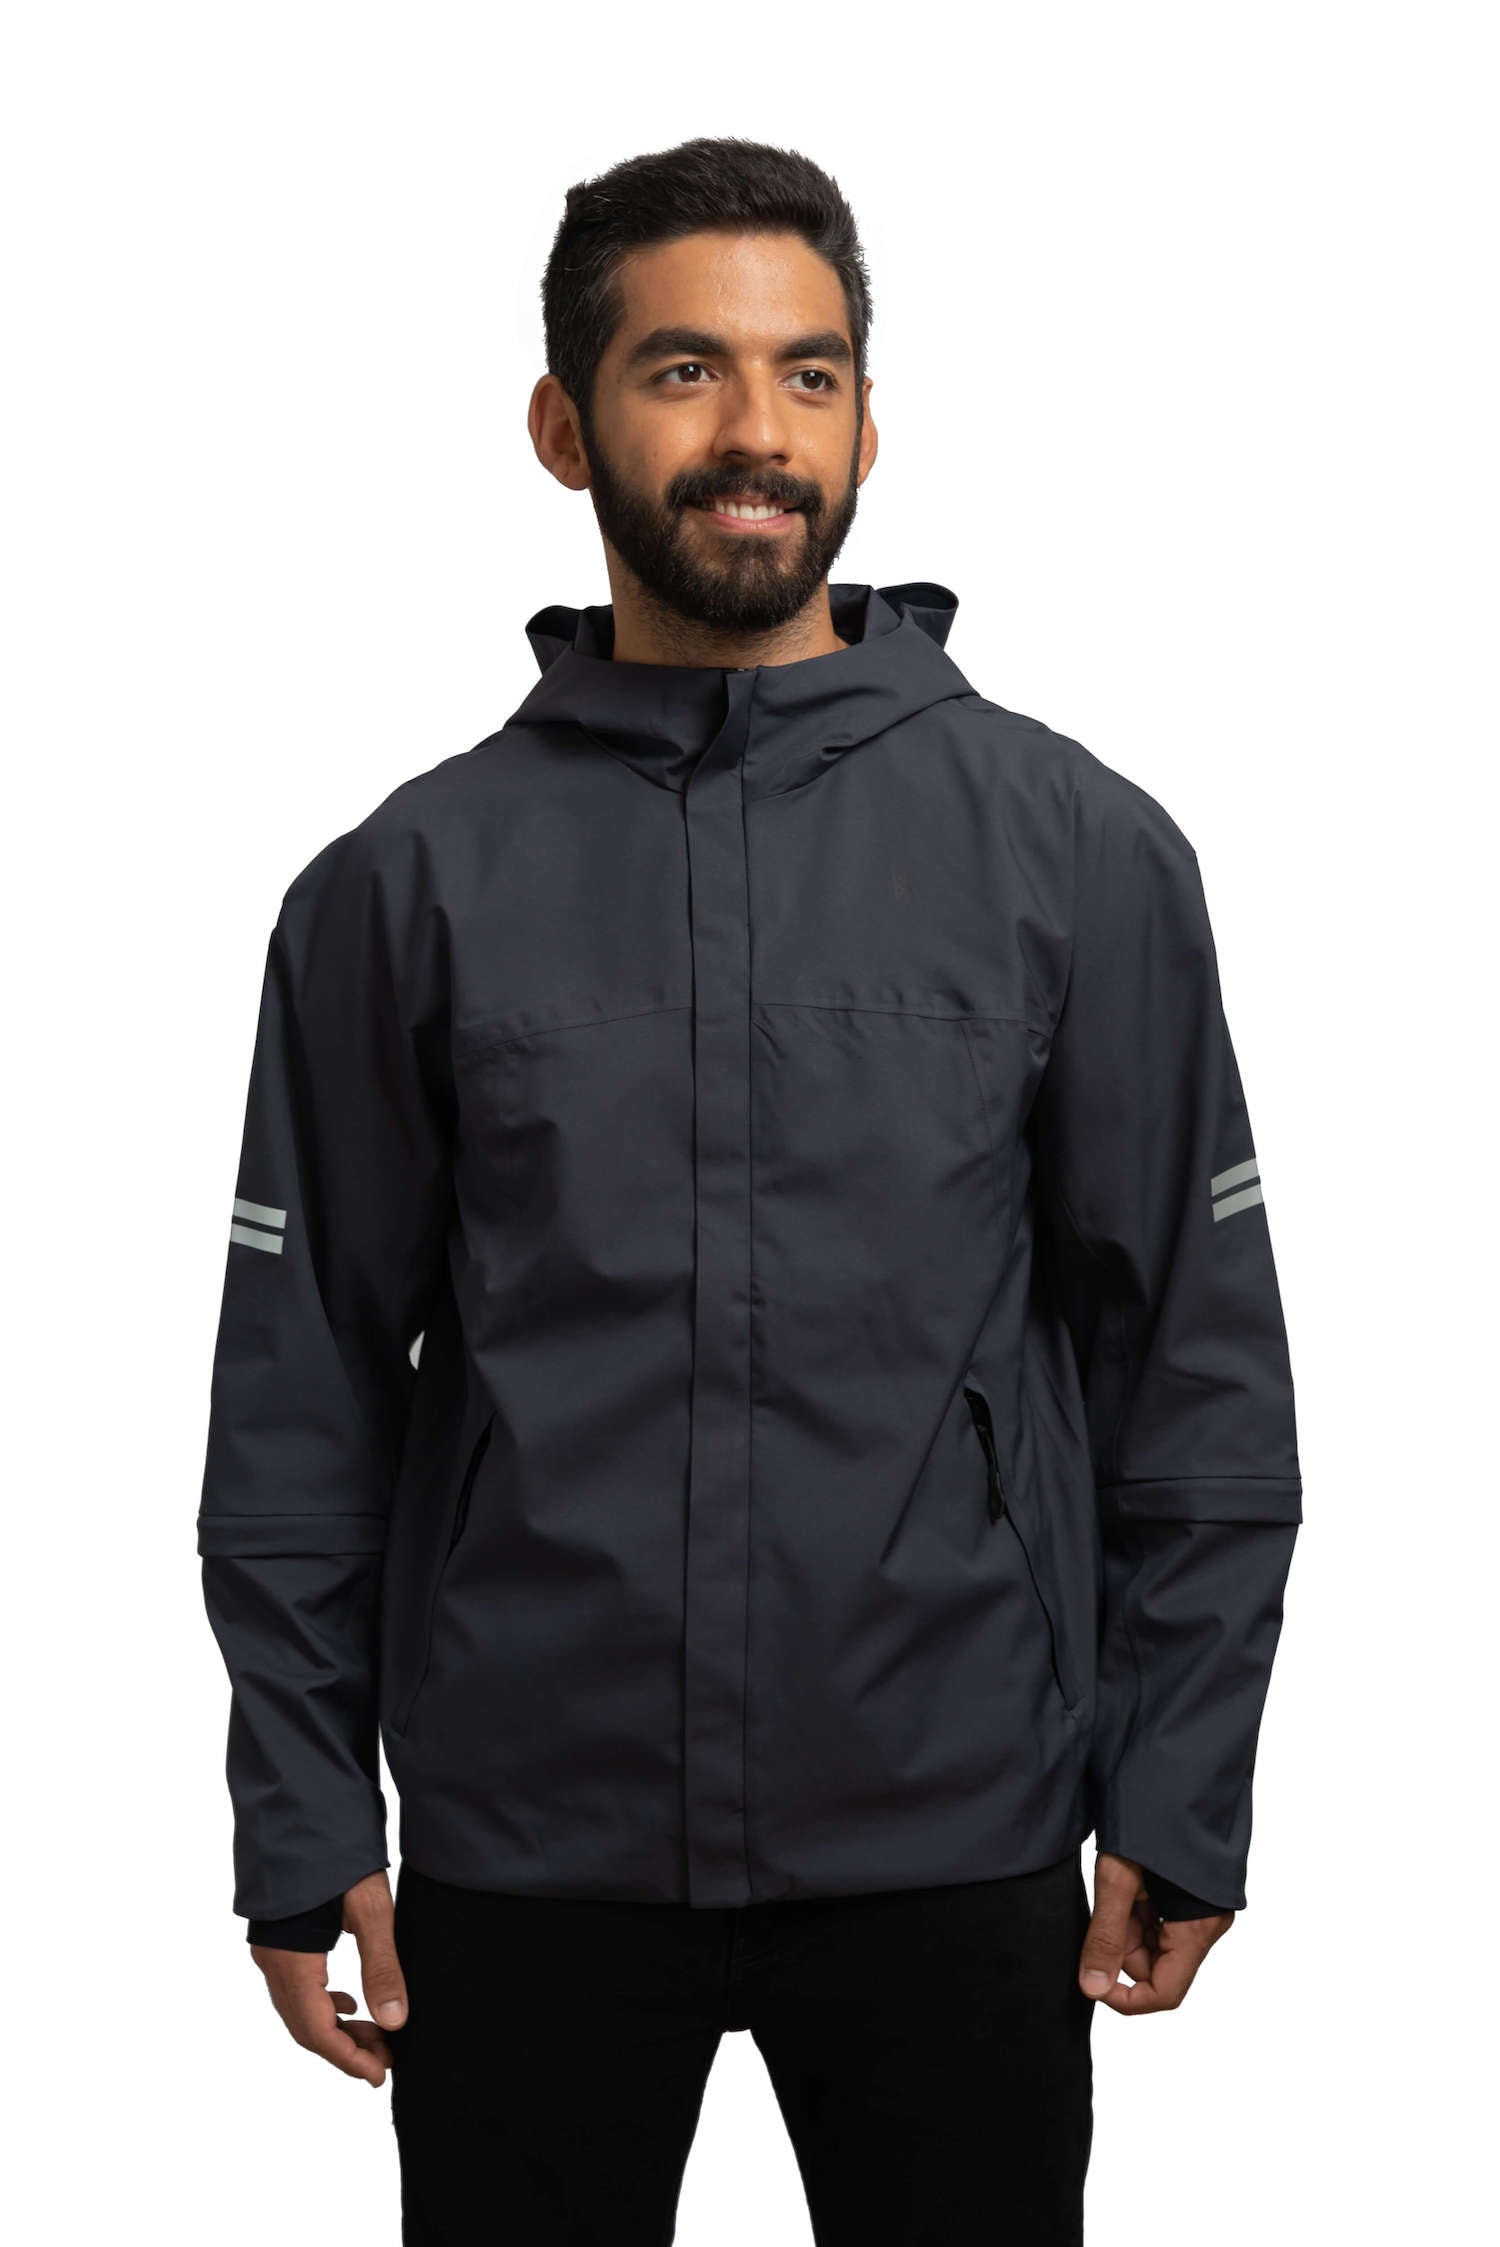 Jacket Unisex - Mens and Womens - Grey Bicycle Wear - Sportswear Organic